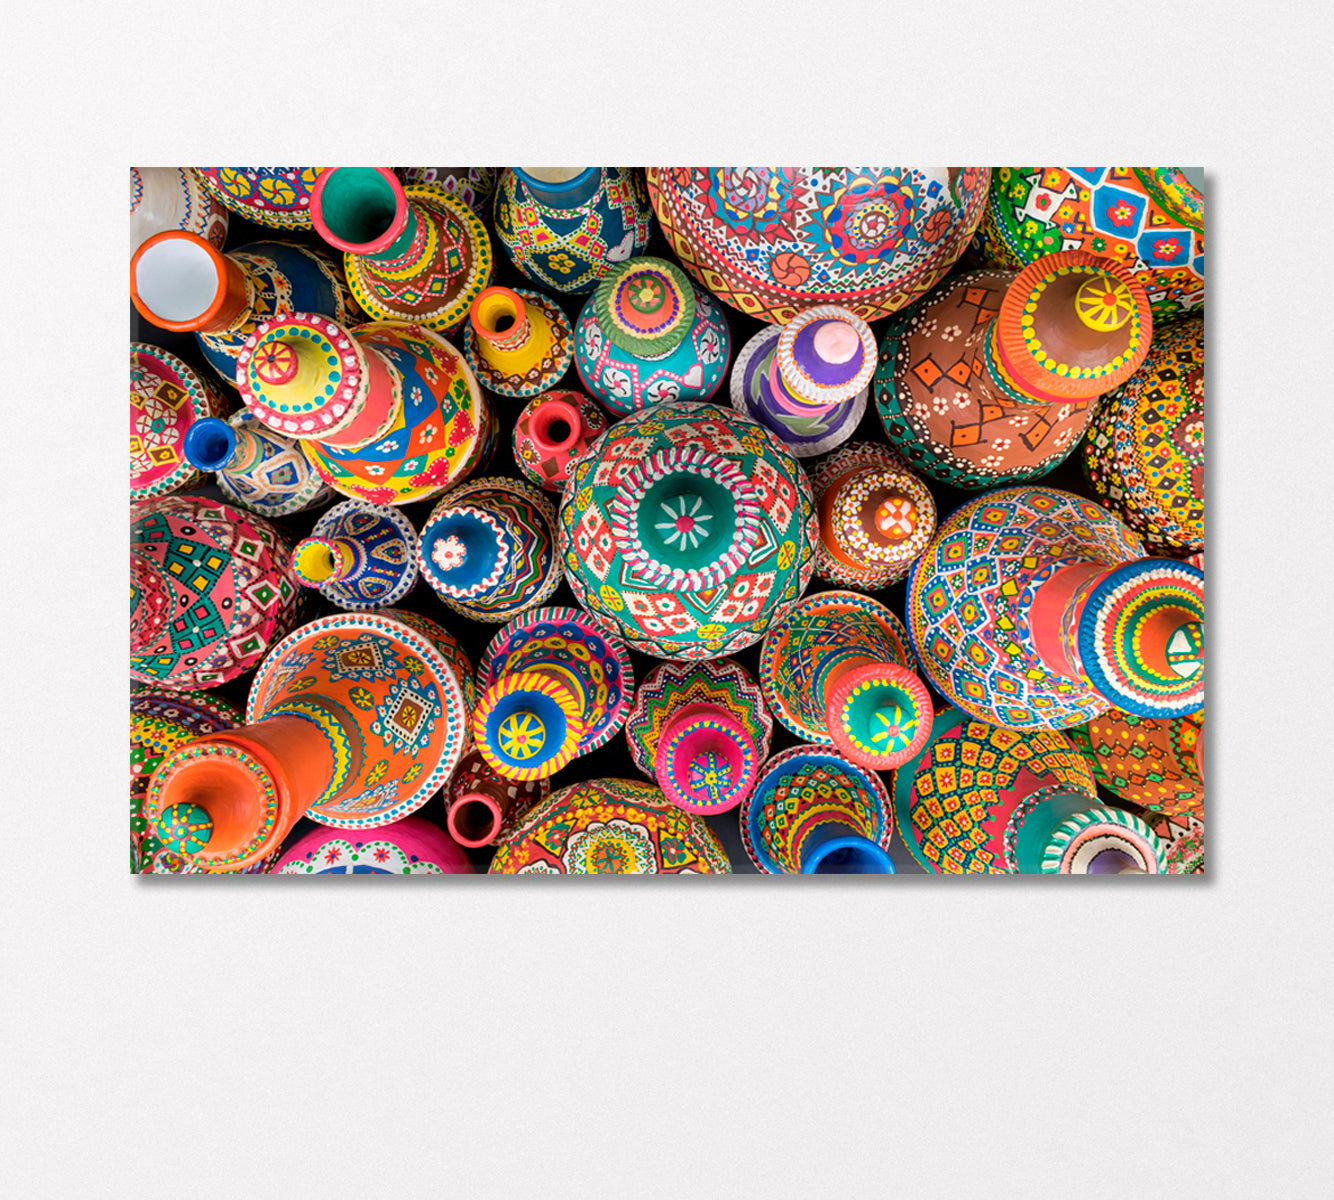 Colorful Hand Painted Ceramic Jugs Canvas Print-Canvas Print-CetArt-1 Panel-24x16 inches-CetArt